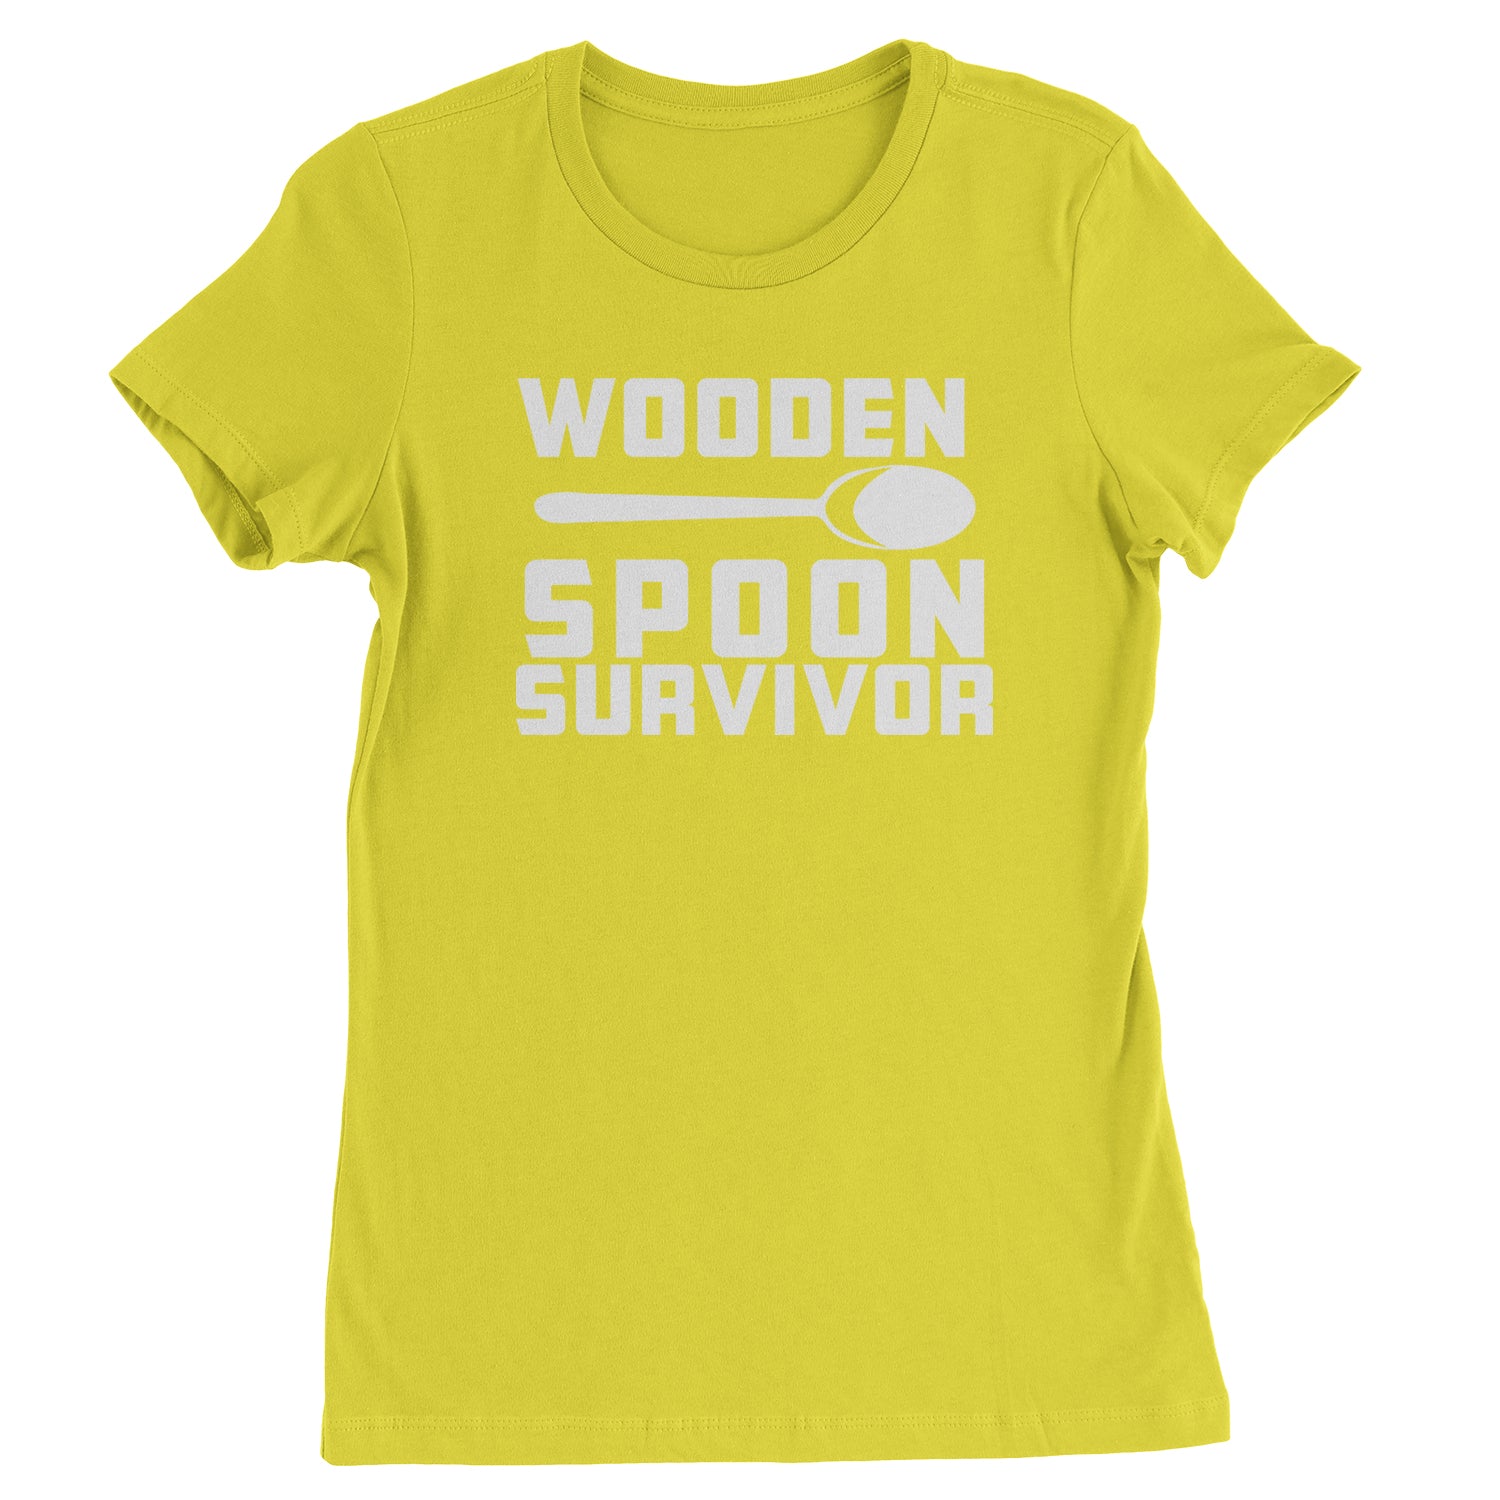 Wooden Spoon Survivor Womens T-shirt funny, shirt, spoon, survivor, wooden by Expression Tees